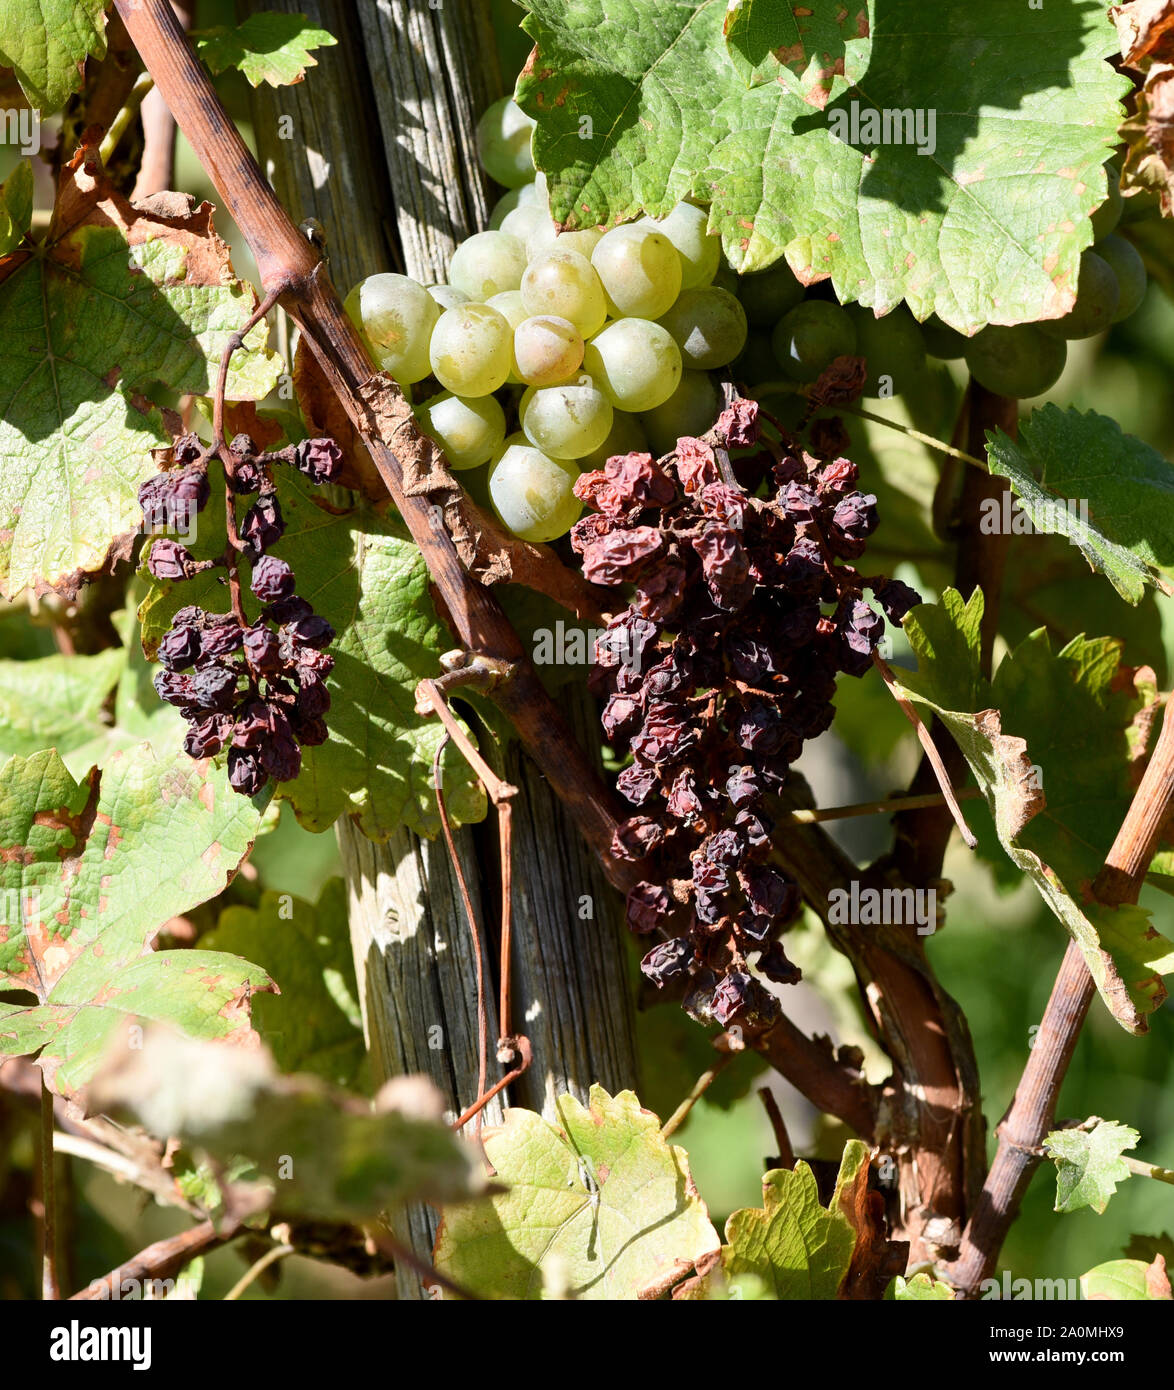 Durch grosse Hitze vetrocknete Weintrauben am Rebenstock. By high heat dried grapes on the vine stock. Stock Photo